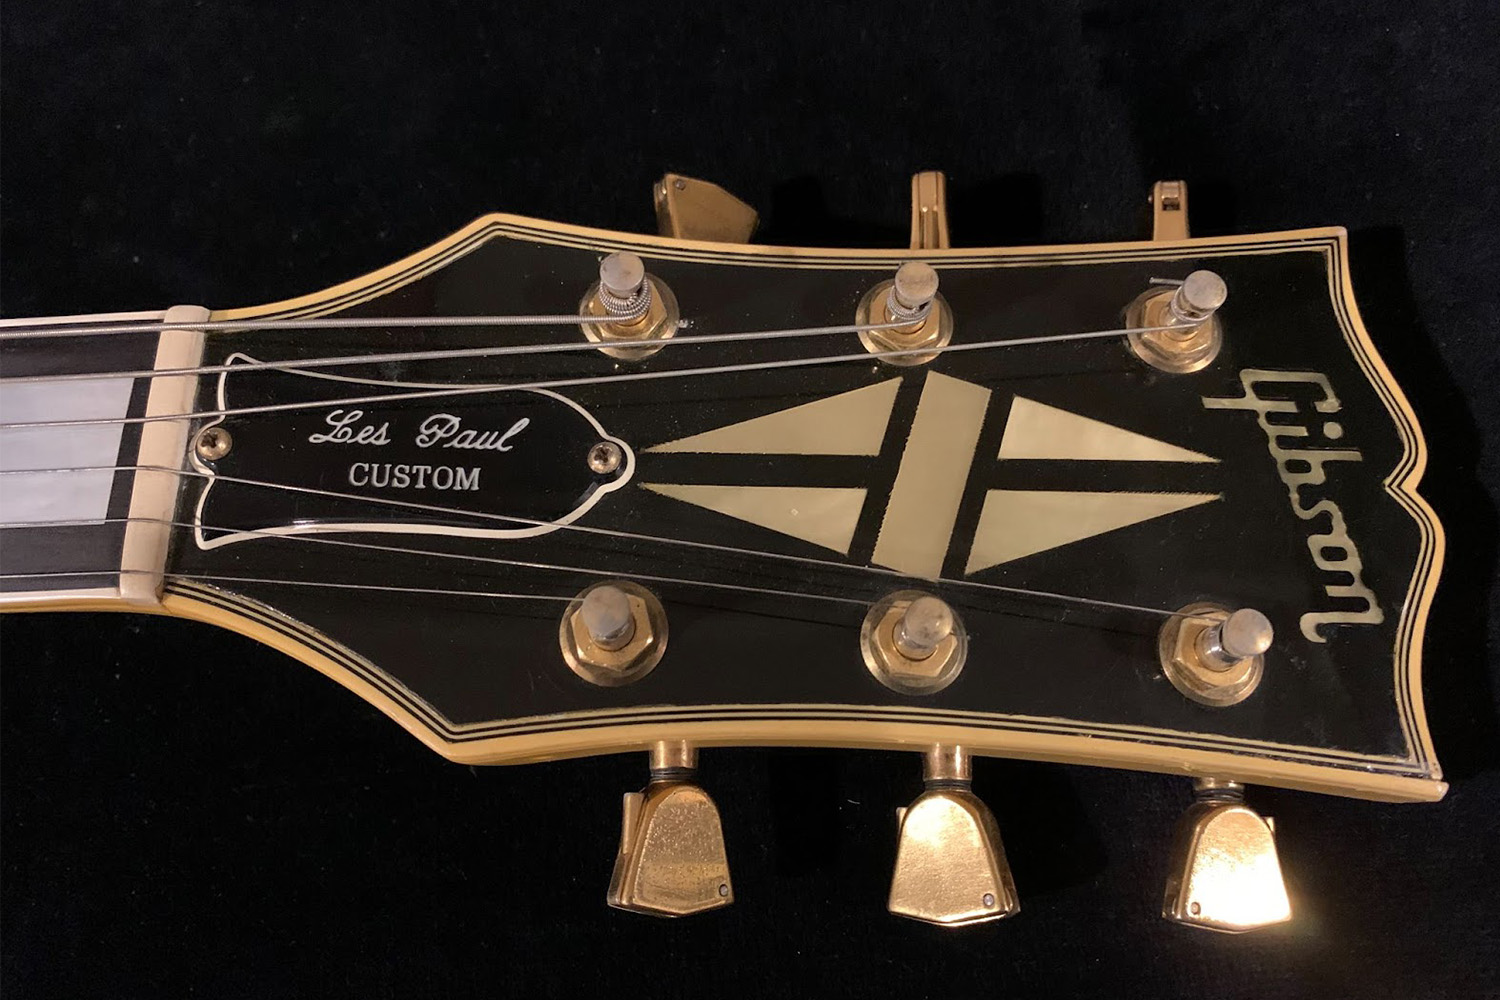 Tom Morello Gives 10-Year-Old Fan Custom Guitar – Billboard